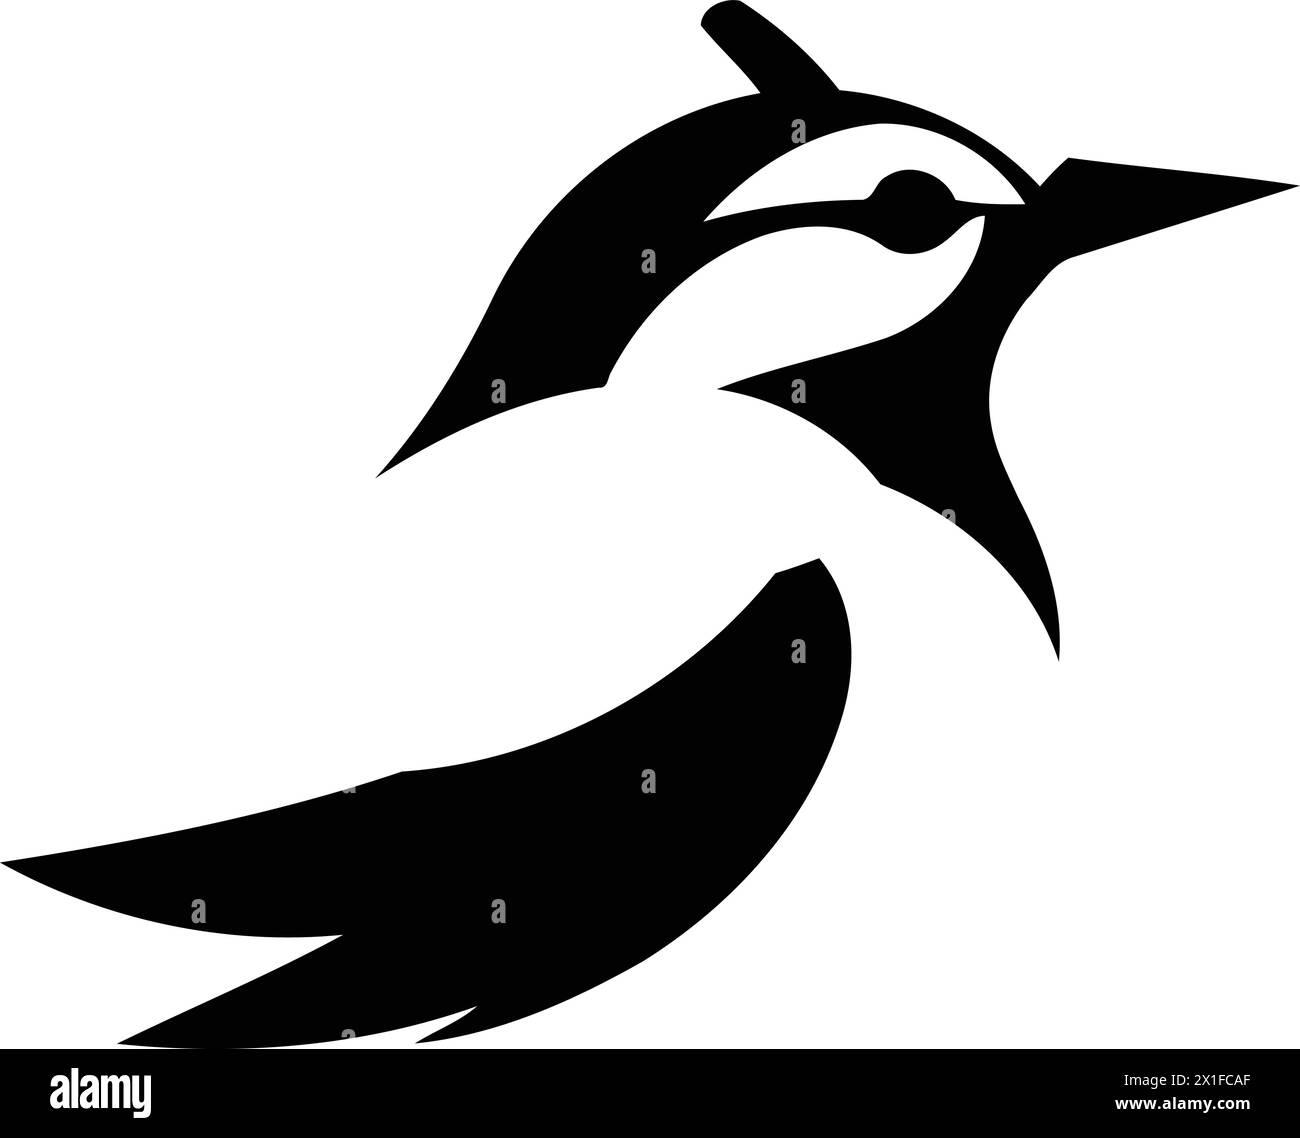 Blue jay bird logo vector Illustration isolated on a white background. Stock Vector